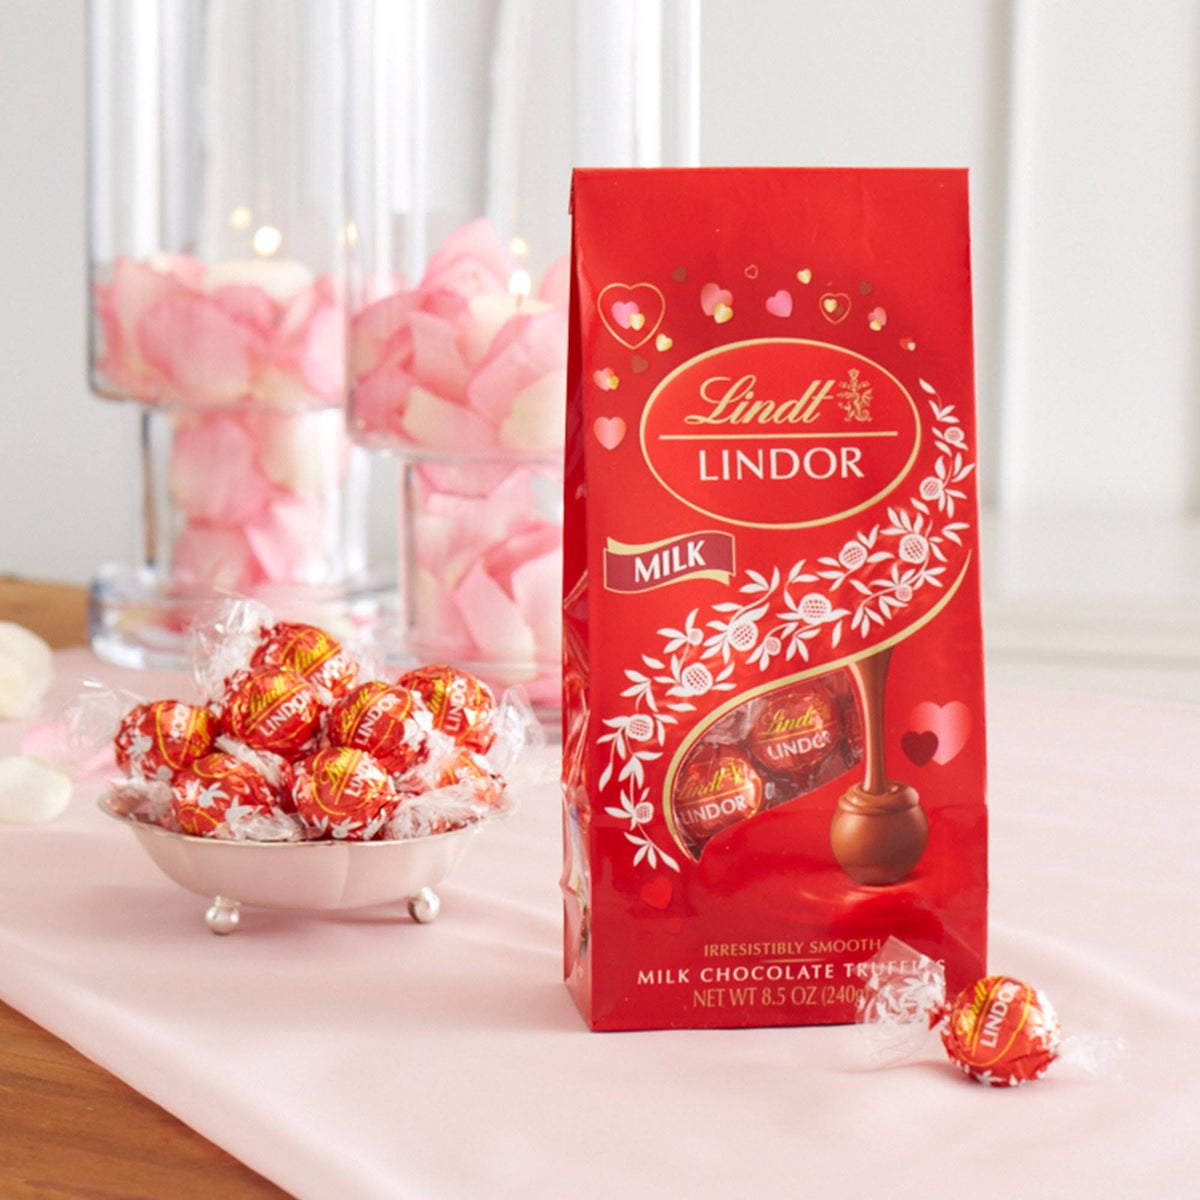 LINDT LINDOR MILK VALENTINE'S DAY MILK CHOCOLATE TRUFFLES 8.5 OZ BAG